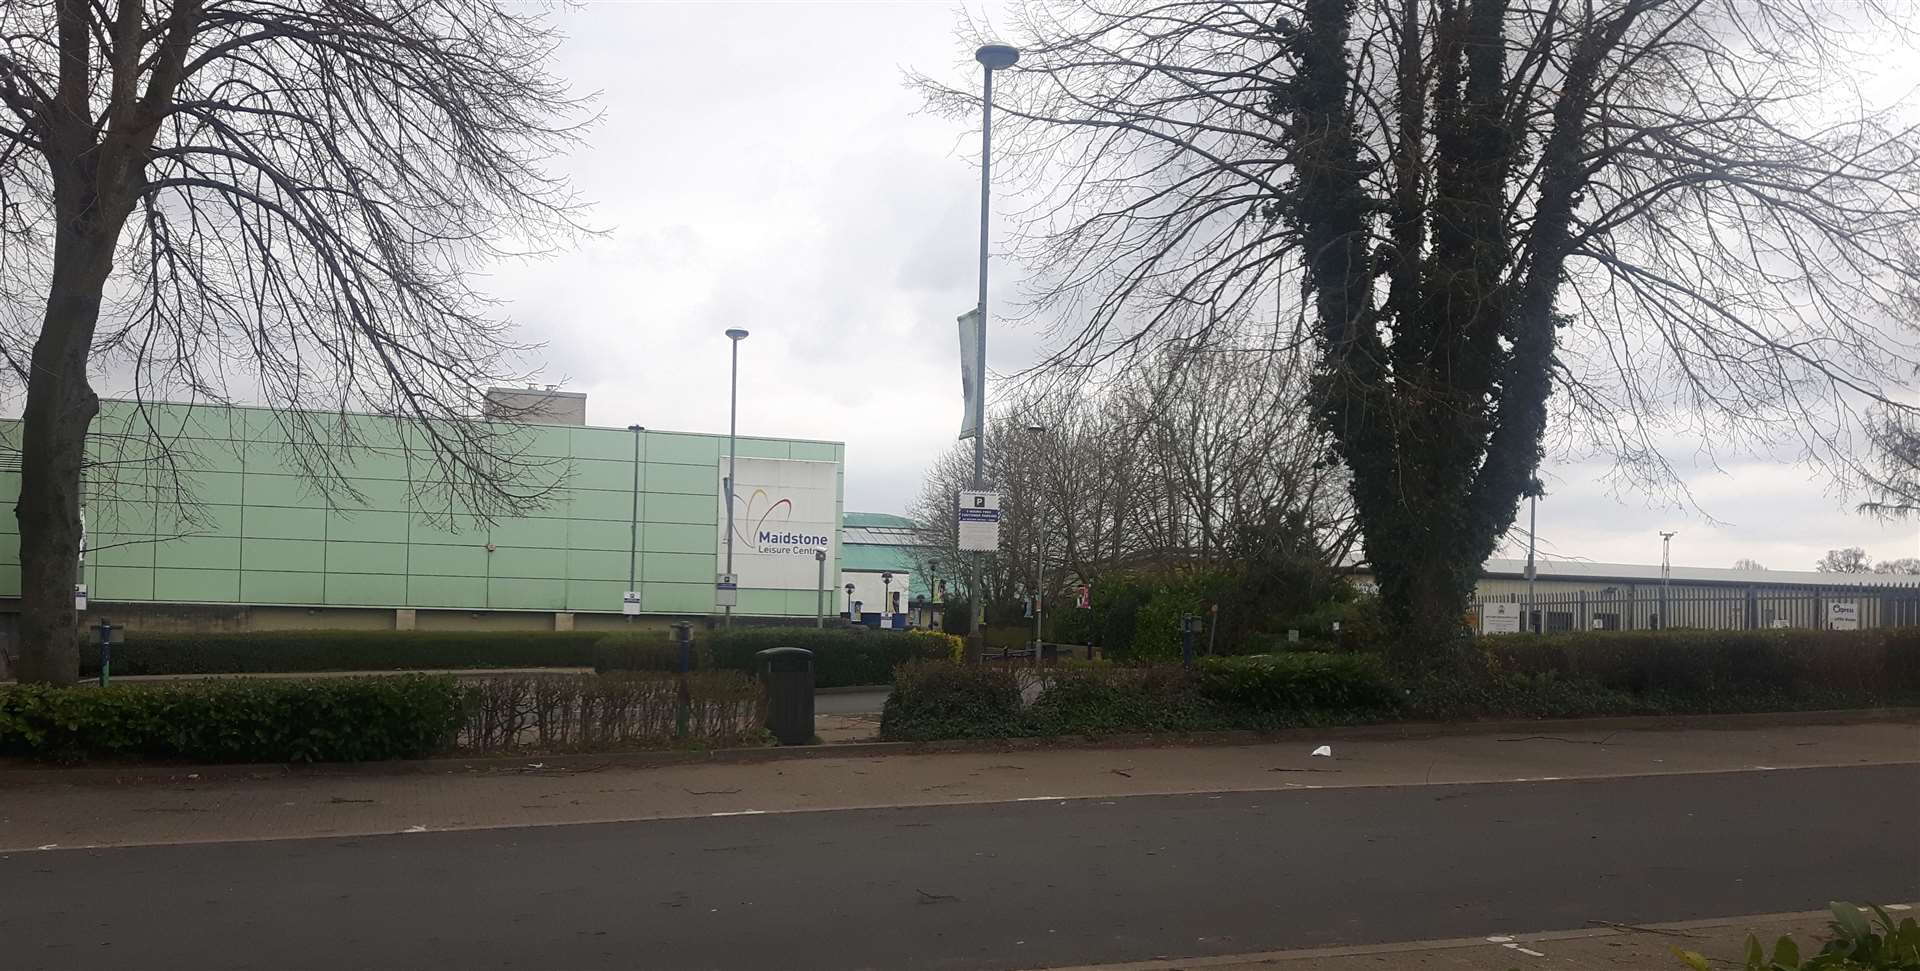 The Maidstone Leisure Centre, where the attack happened